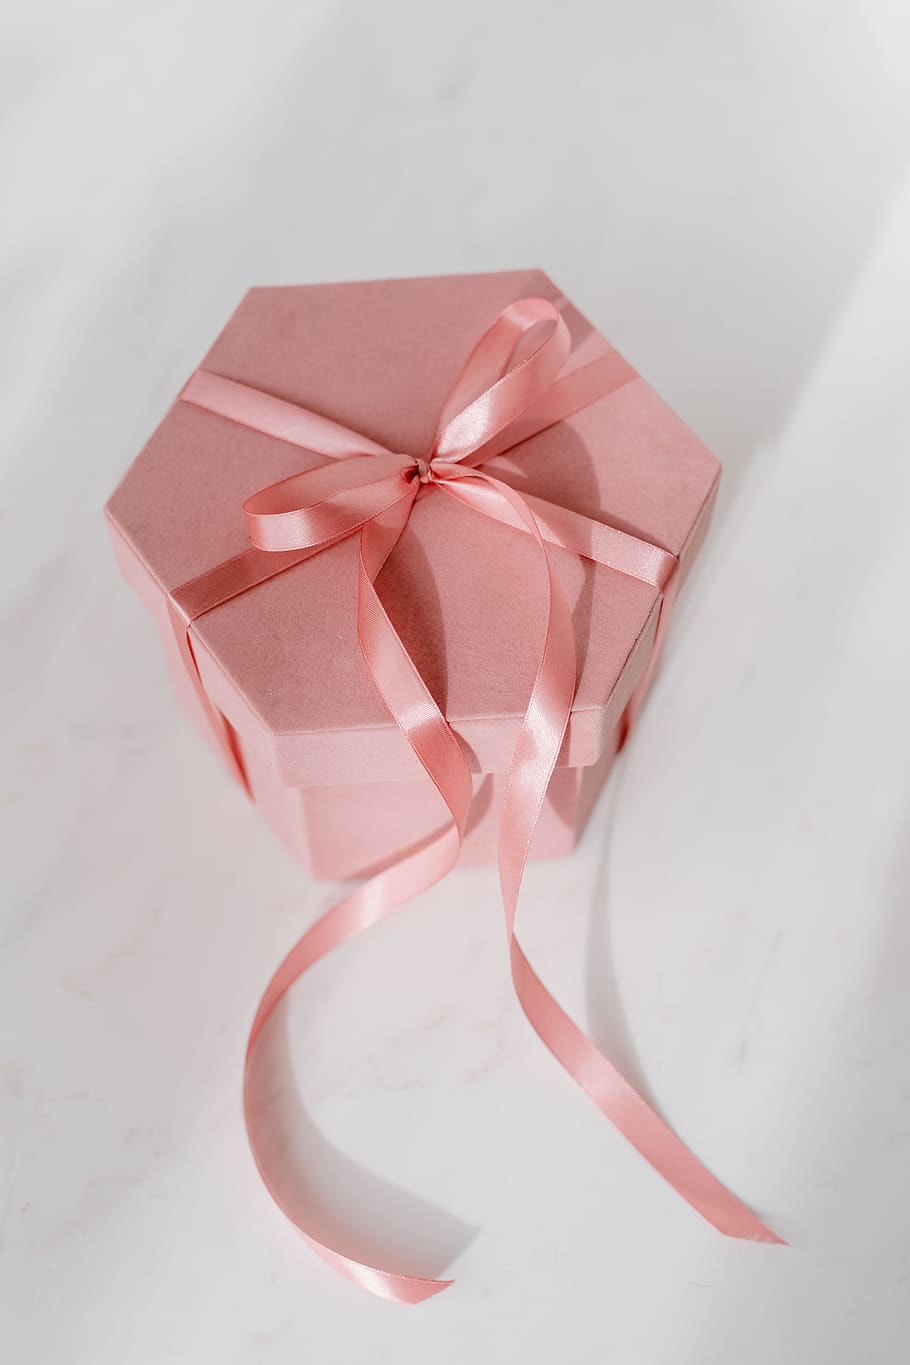 regalo, caja, rosa, seda, sedoso, terciopelo, cinta, lazo, lindo, dulce